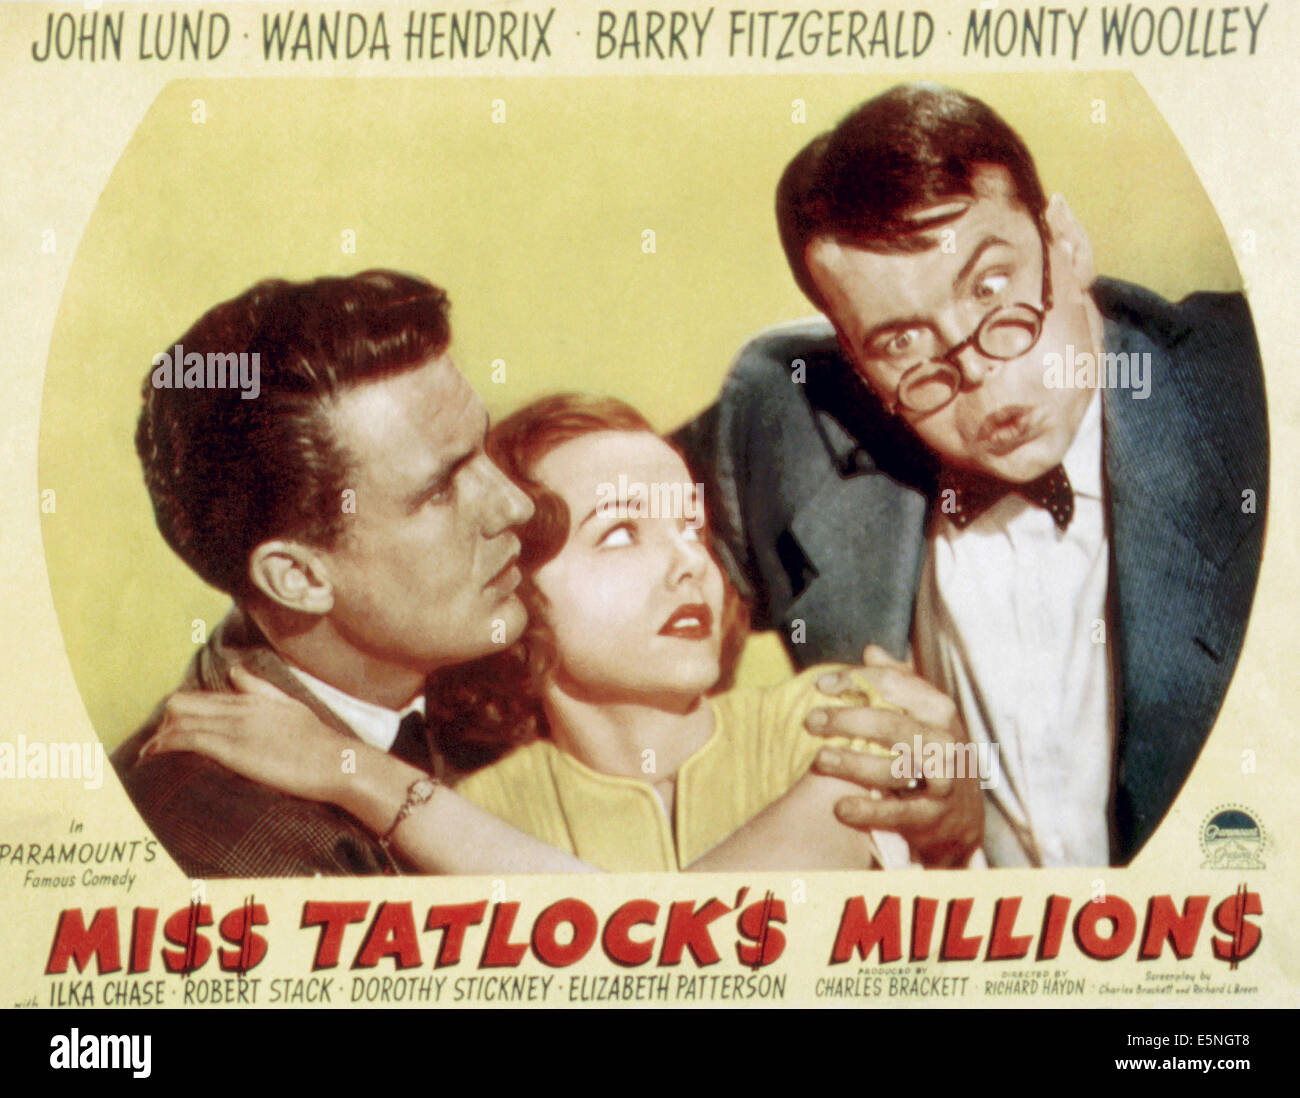 MISS TATLOCK'S MILLIONS, Robert Stack, Wanda Hendrix, John Lund, 1948 Stock Photo